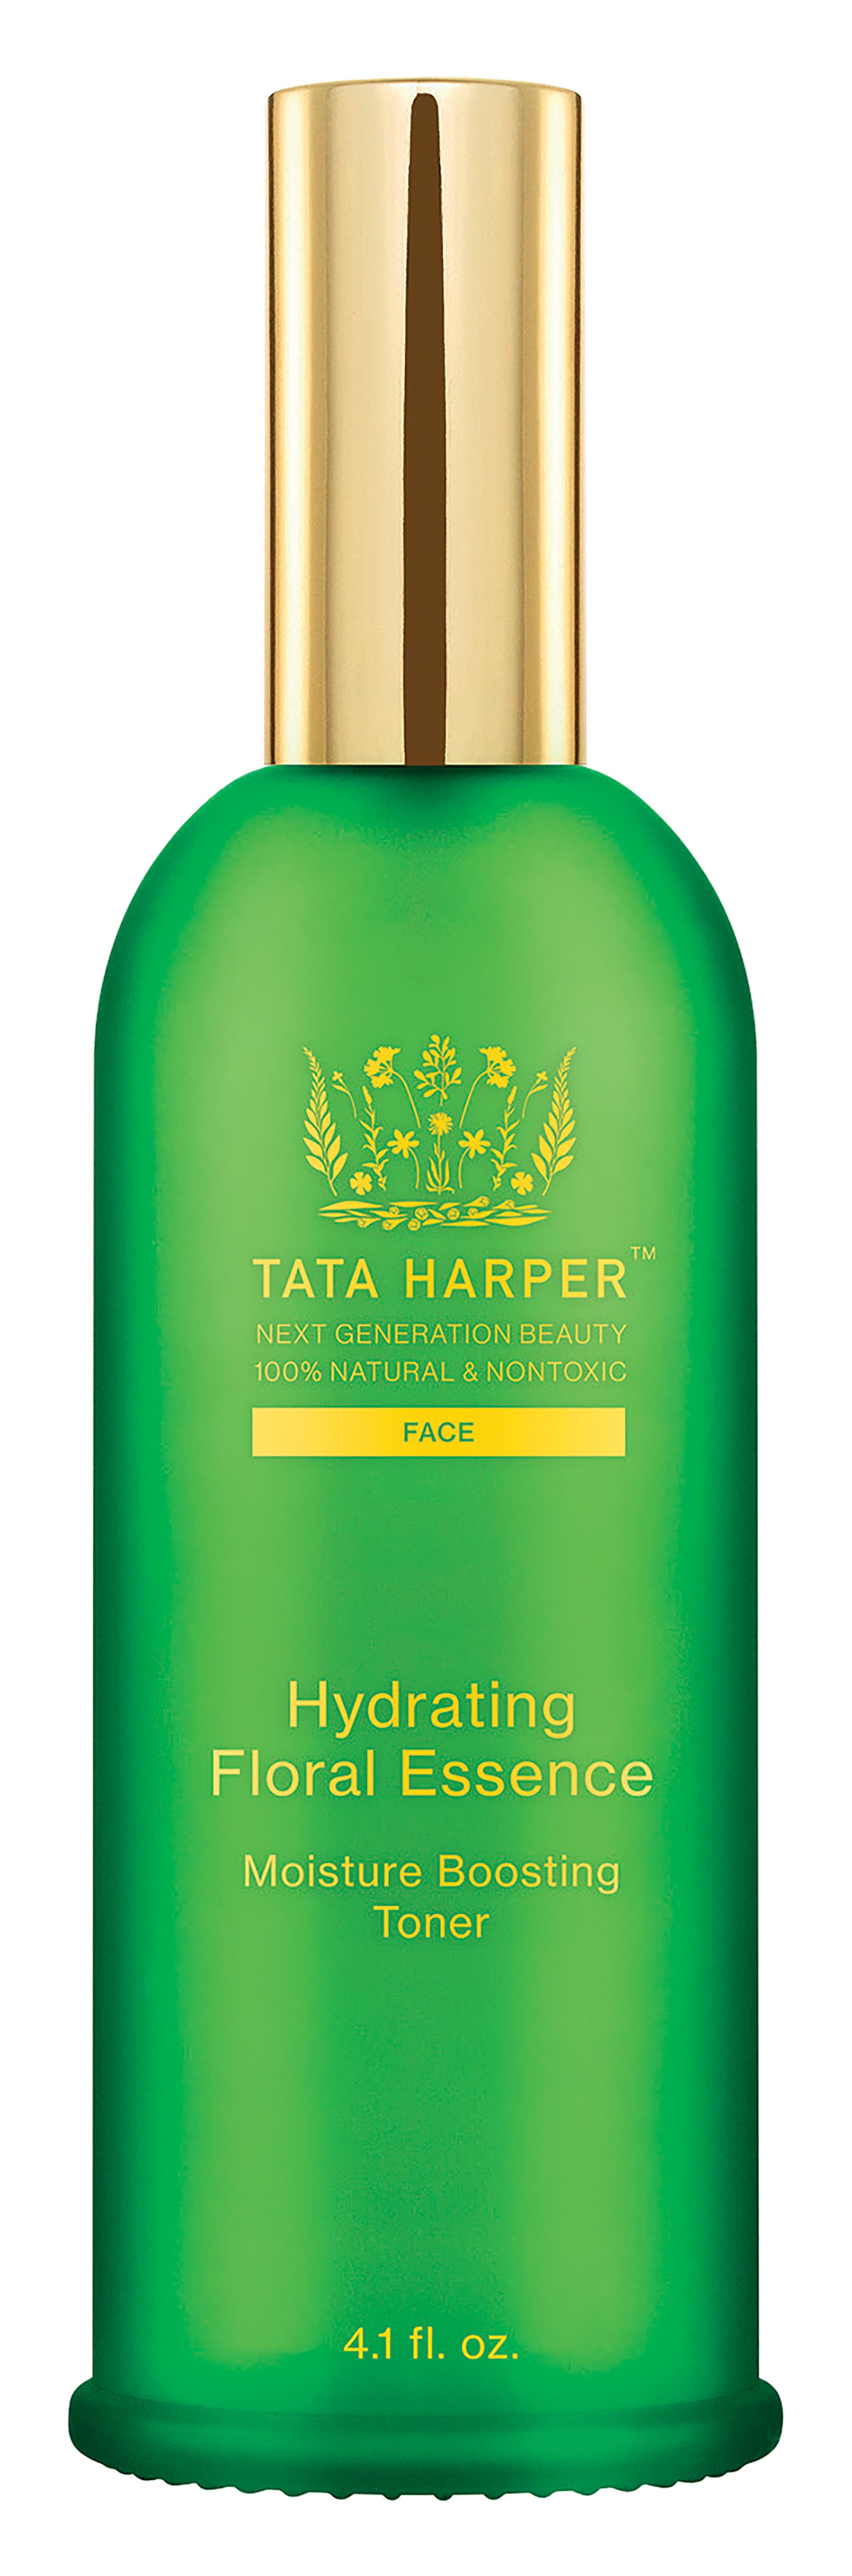 mỹ phẩm thuần chay essence Tata Harper